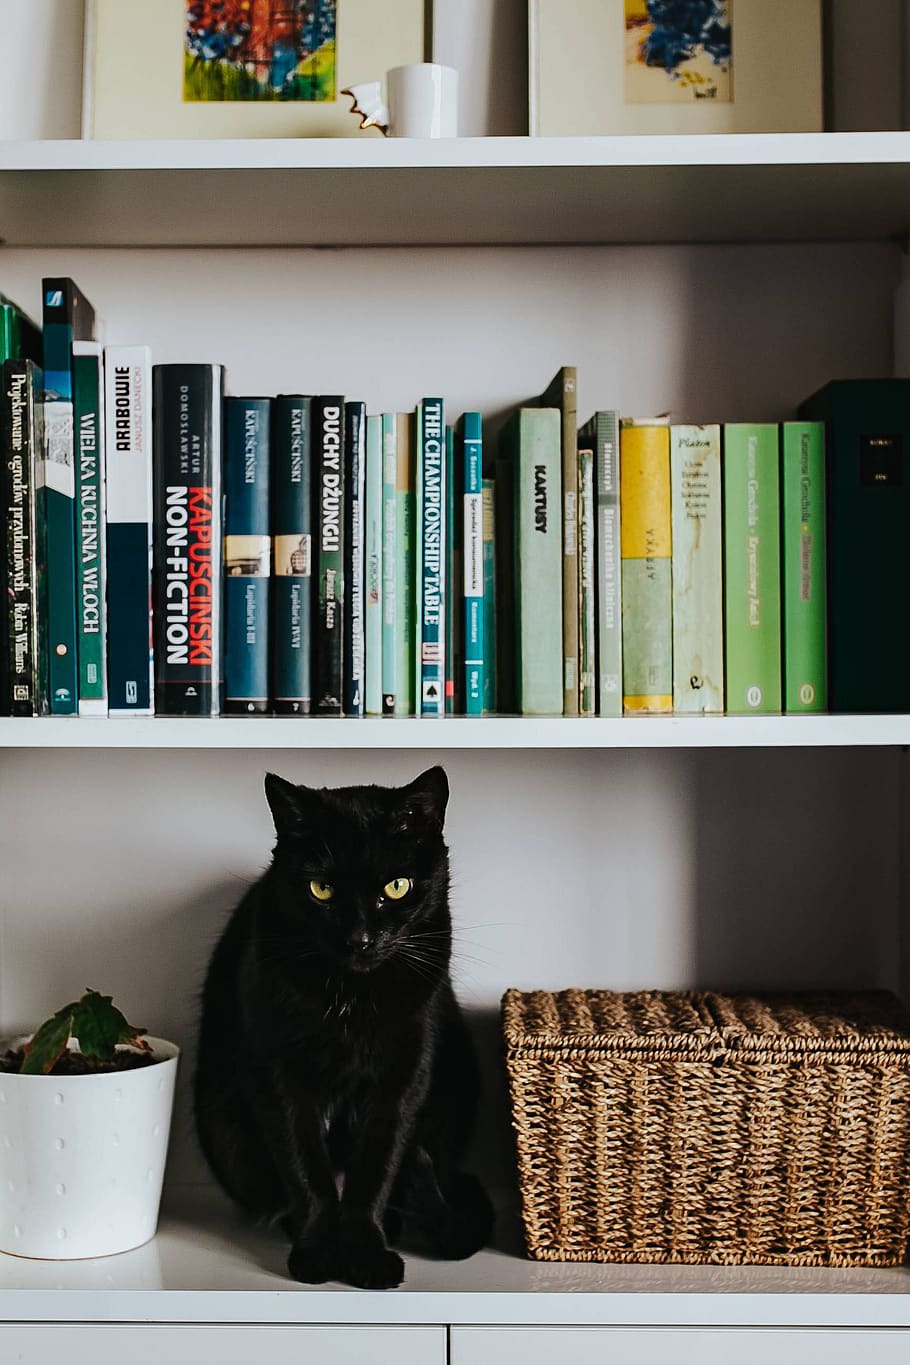 animal de estimação, animal, gato, livros, cesta, estante, estante de livros, felino, Preto, vime